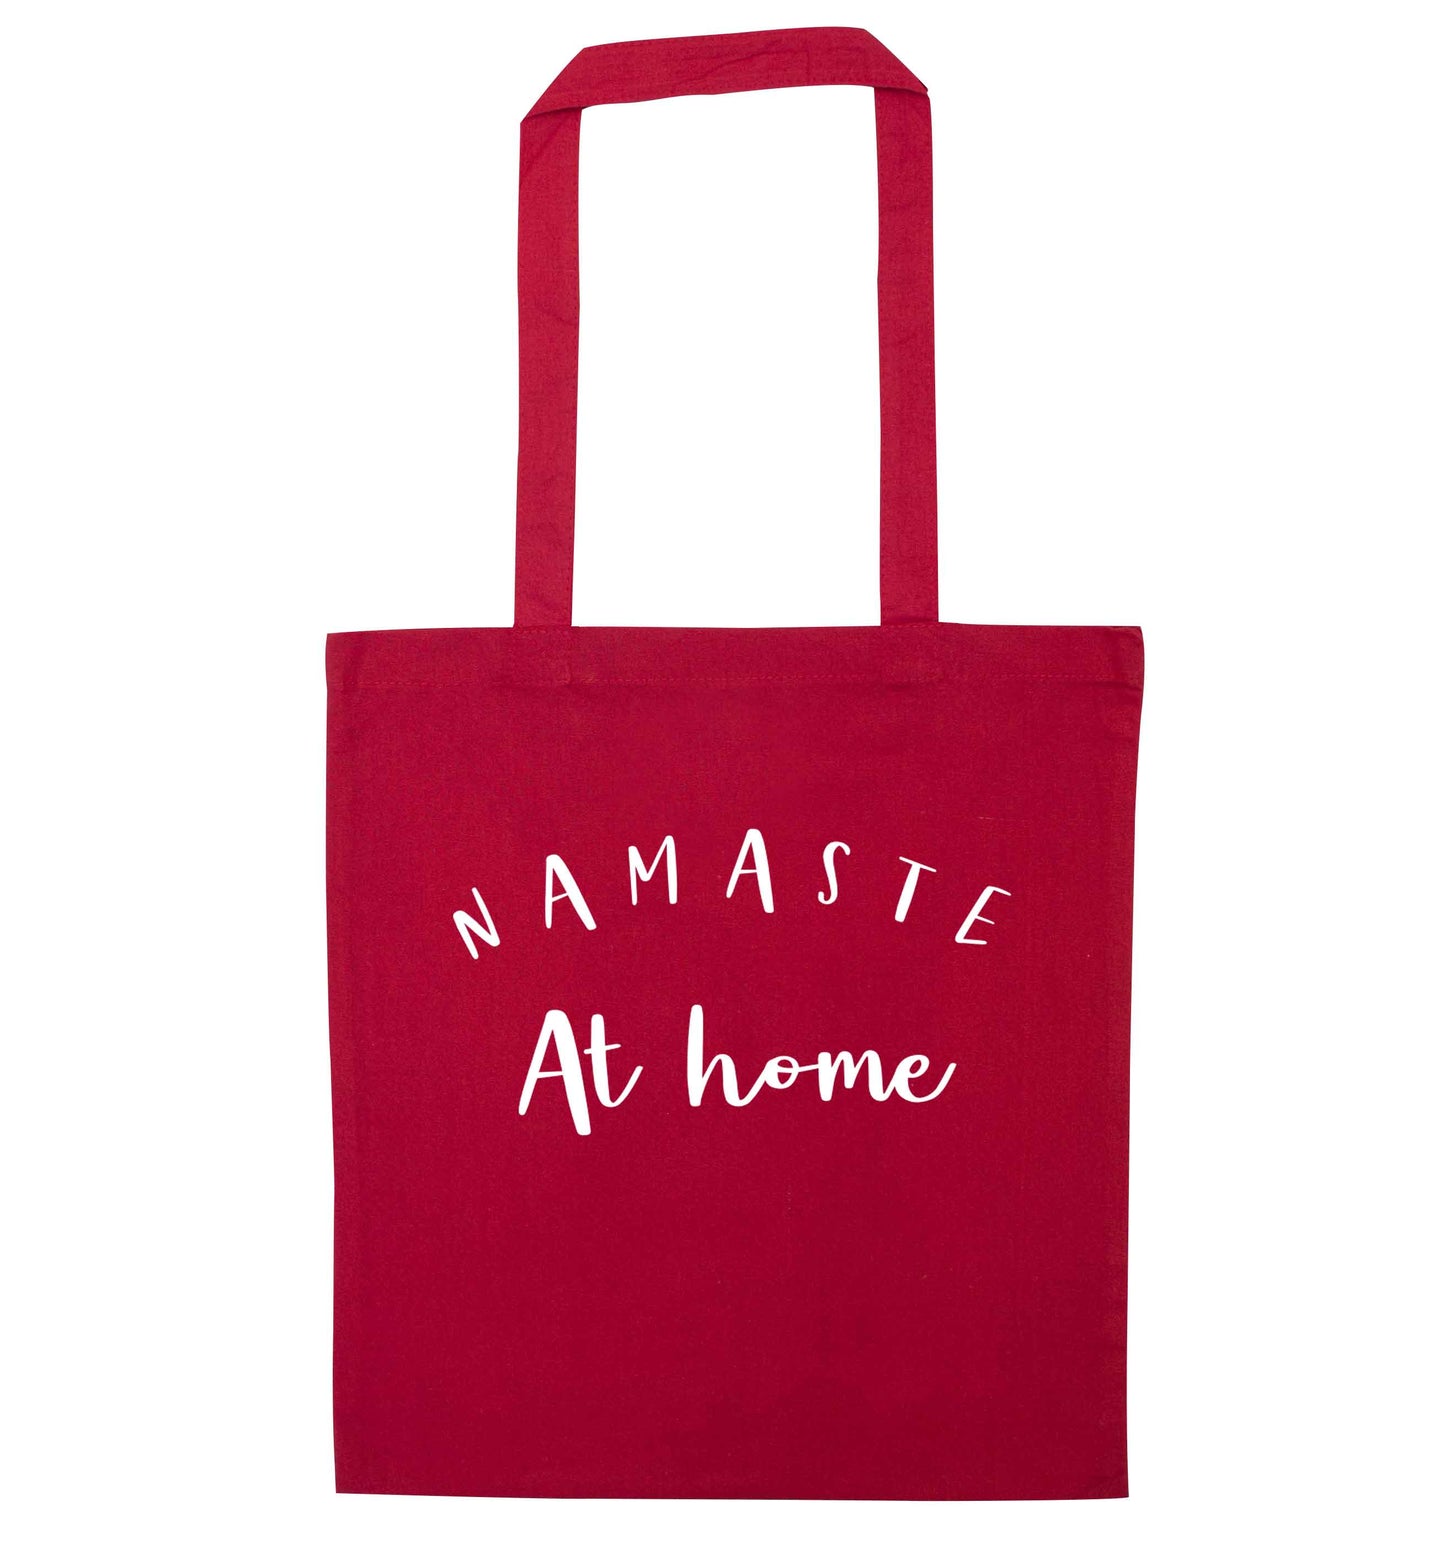 Namaste at home red tote bag